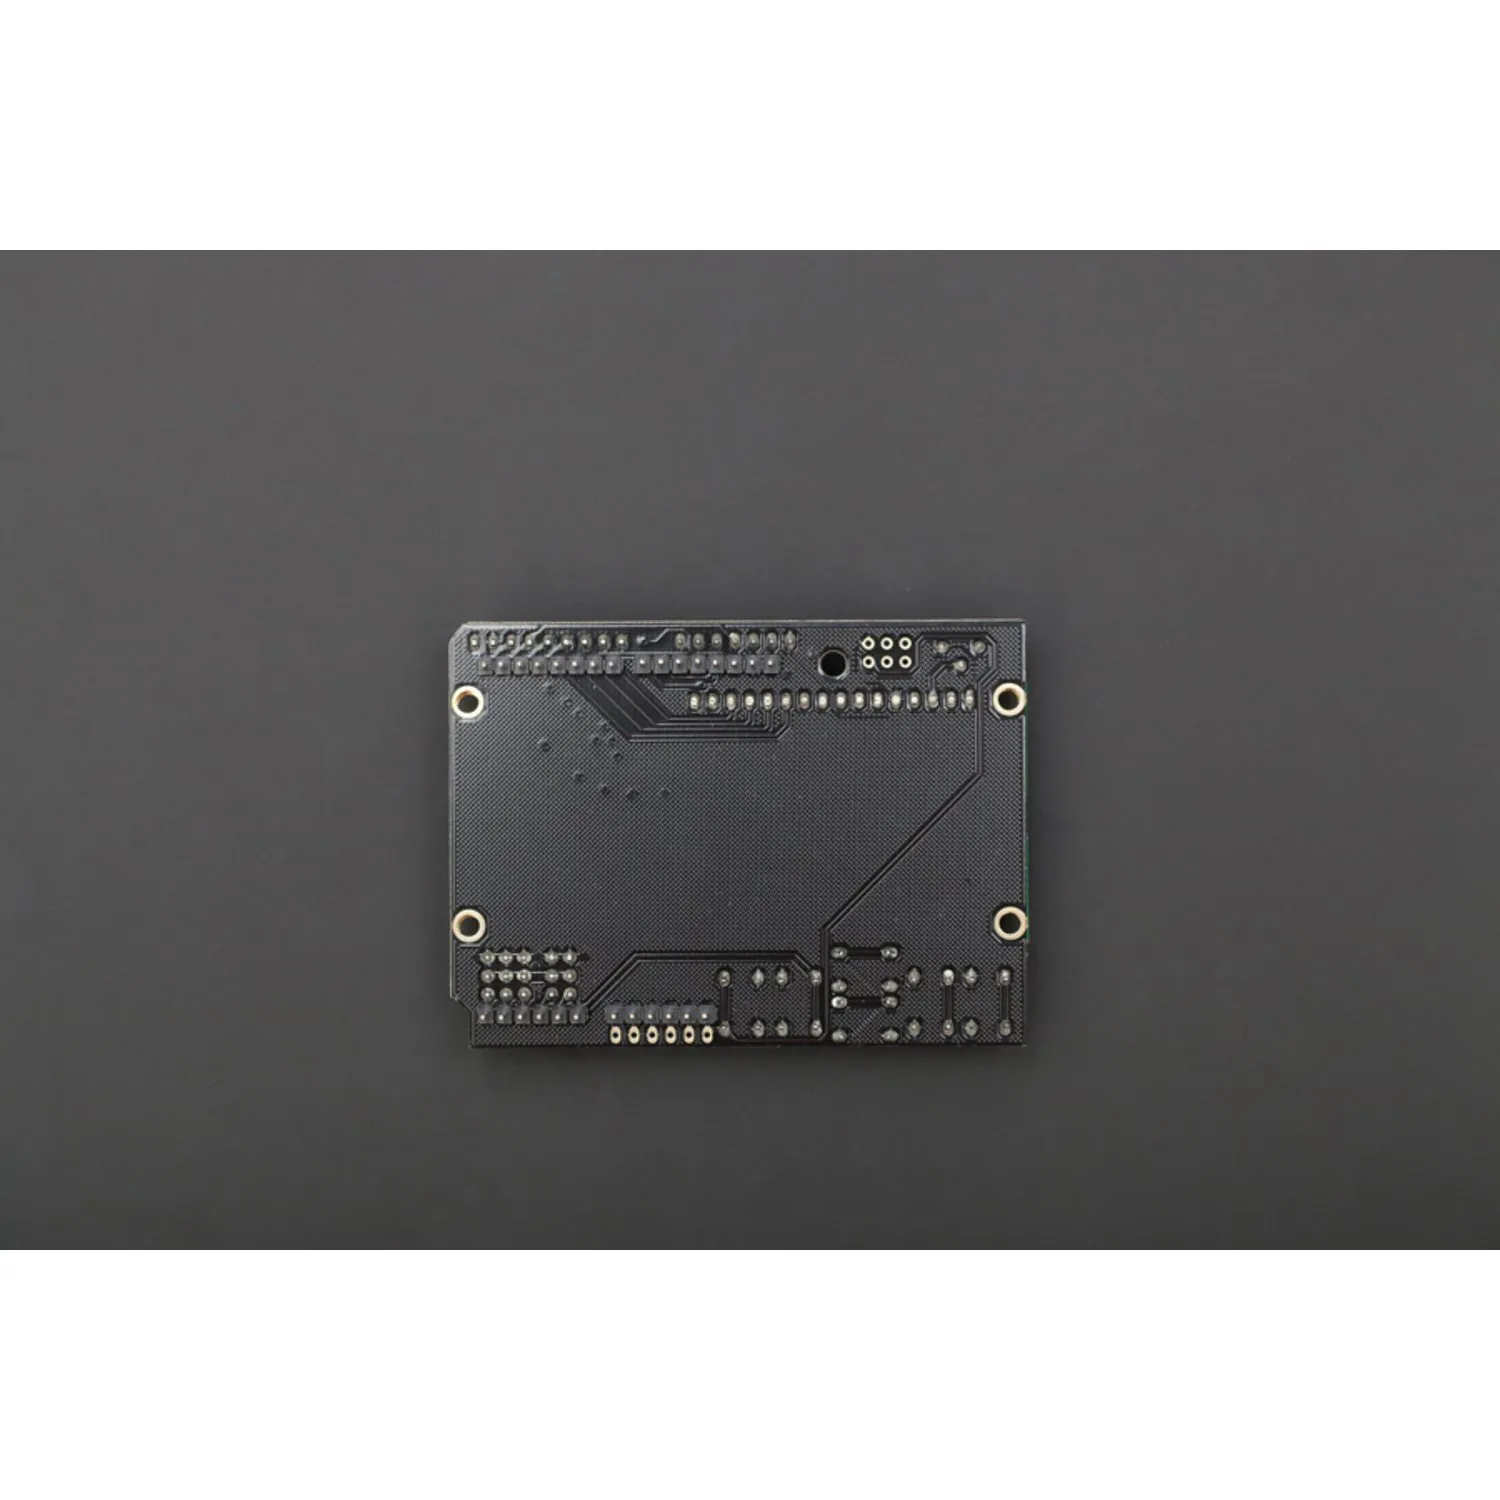 Photo of 1602 LCD Keypad Shield For Arduino